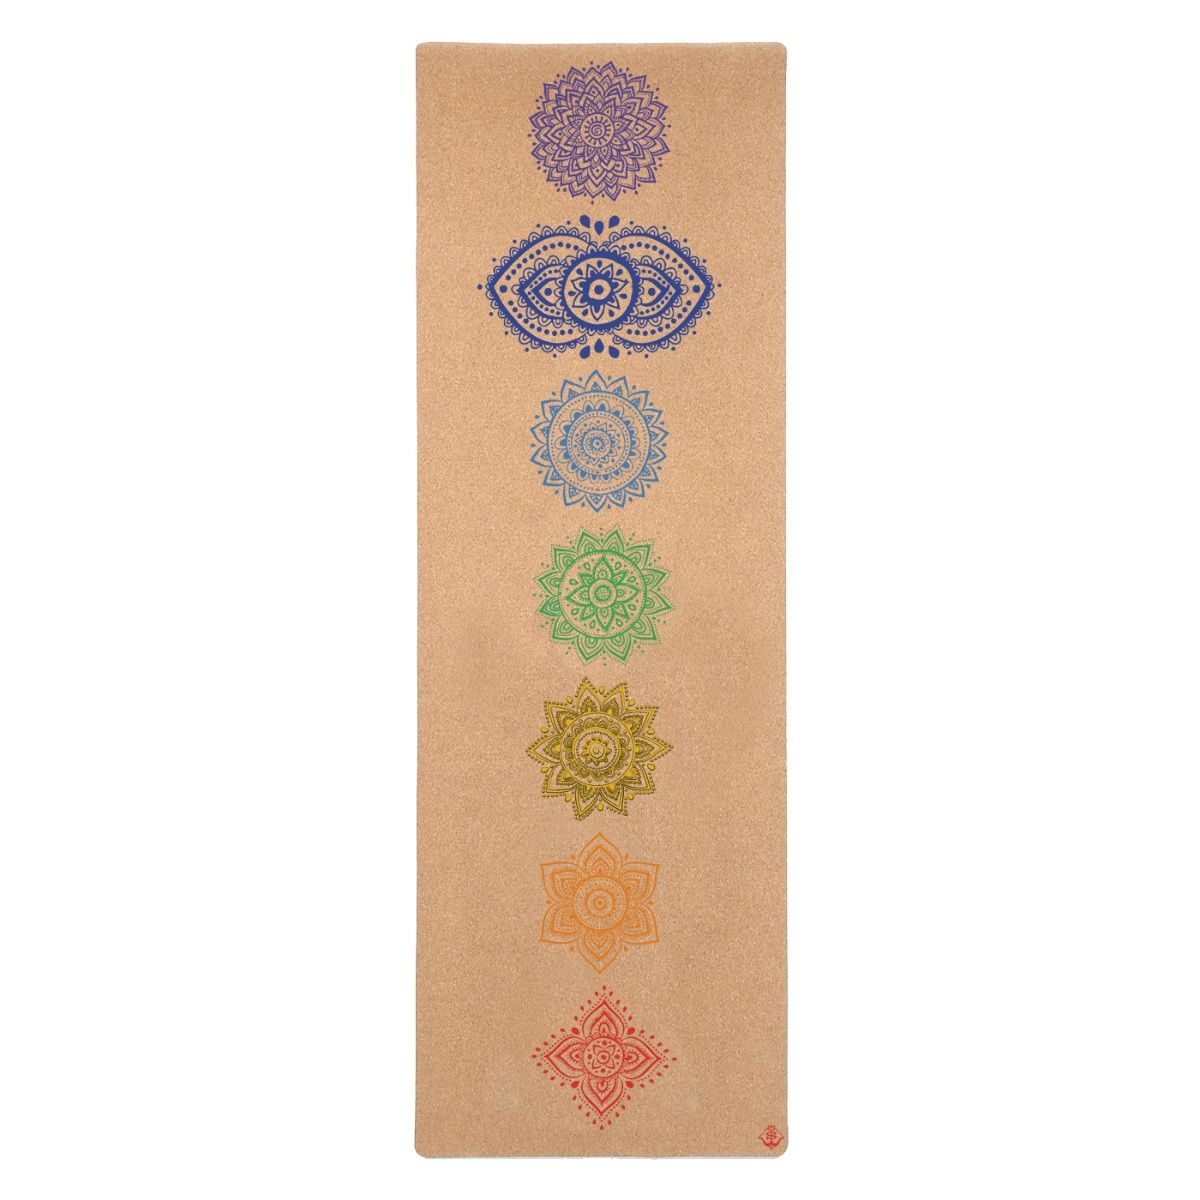 Spiritual Warrior Chakra Pro Cork Yoga Mat (3mm thickness) - Brown